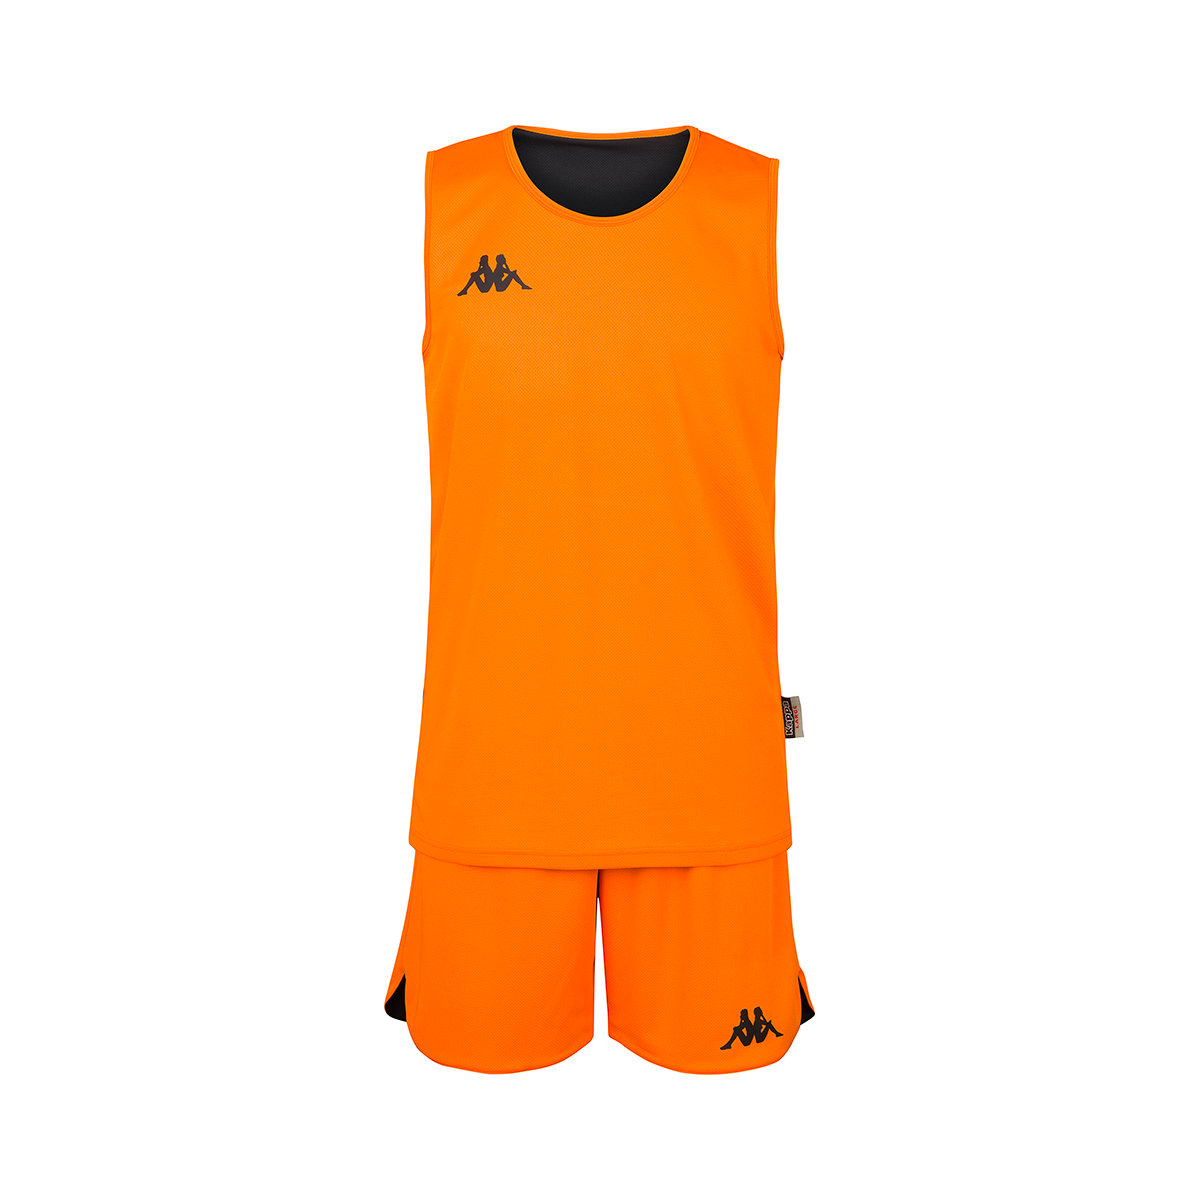 Camiseta de juego Basket Cairosi Naranja Hombre - Imagen 1